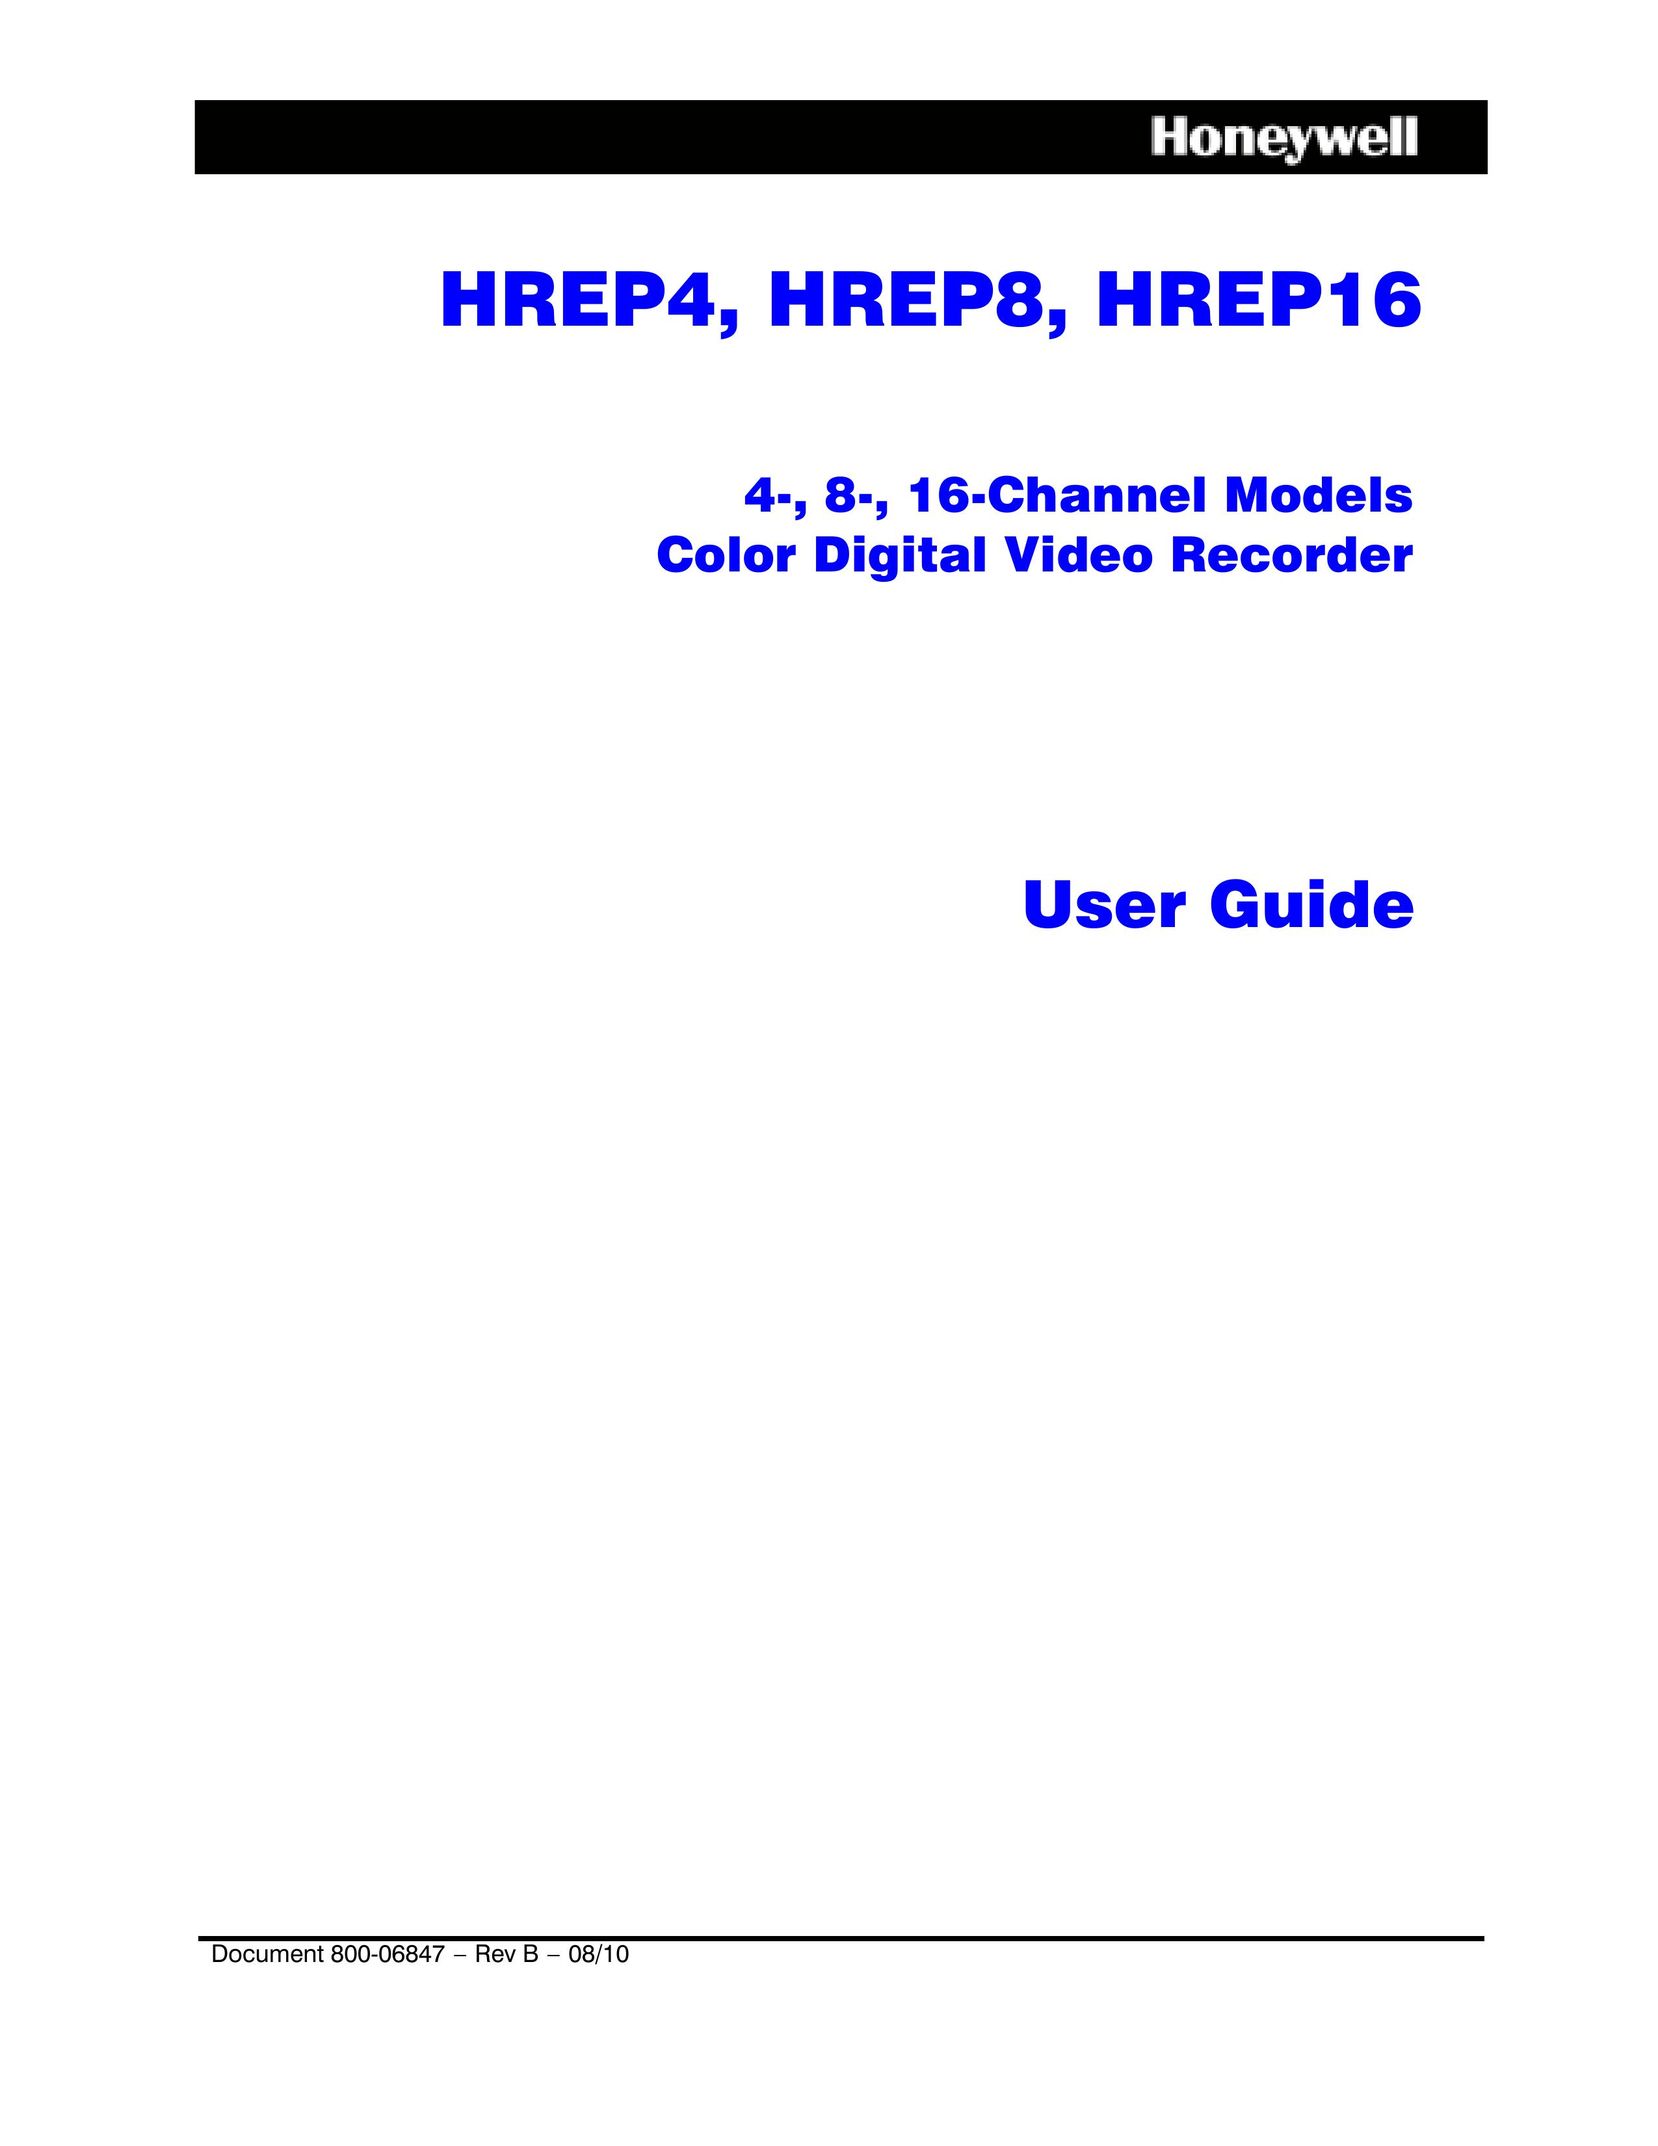 Honeywell HREP8 DVR User Manual